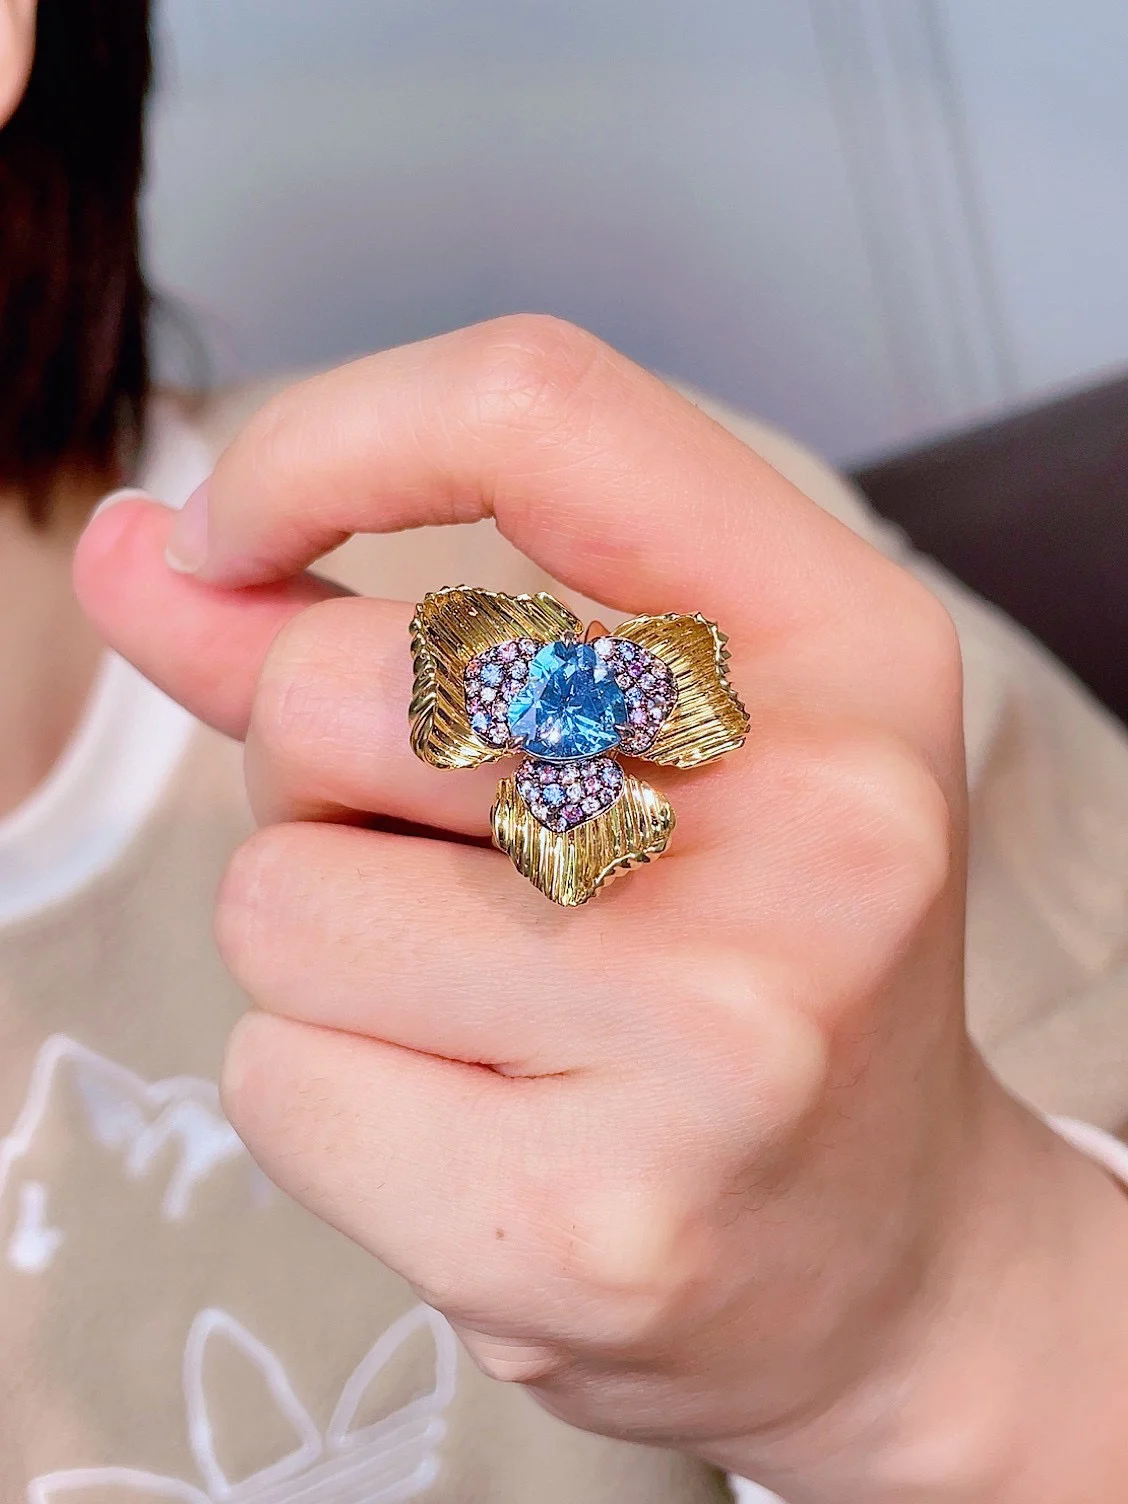 HJY תרשיש טבעת תכשיטים טהור 18K זהב טבעי 2.3ct כחול תרשיש אבני חן בסדר טבעות לנשים מתנות יום הולדת